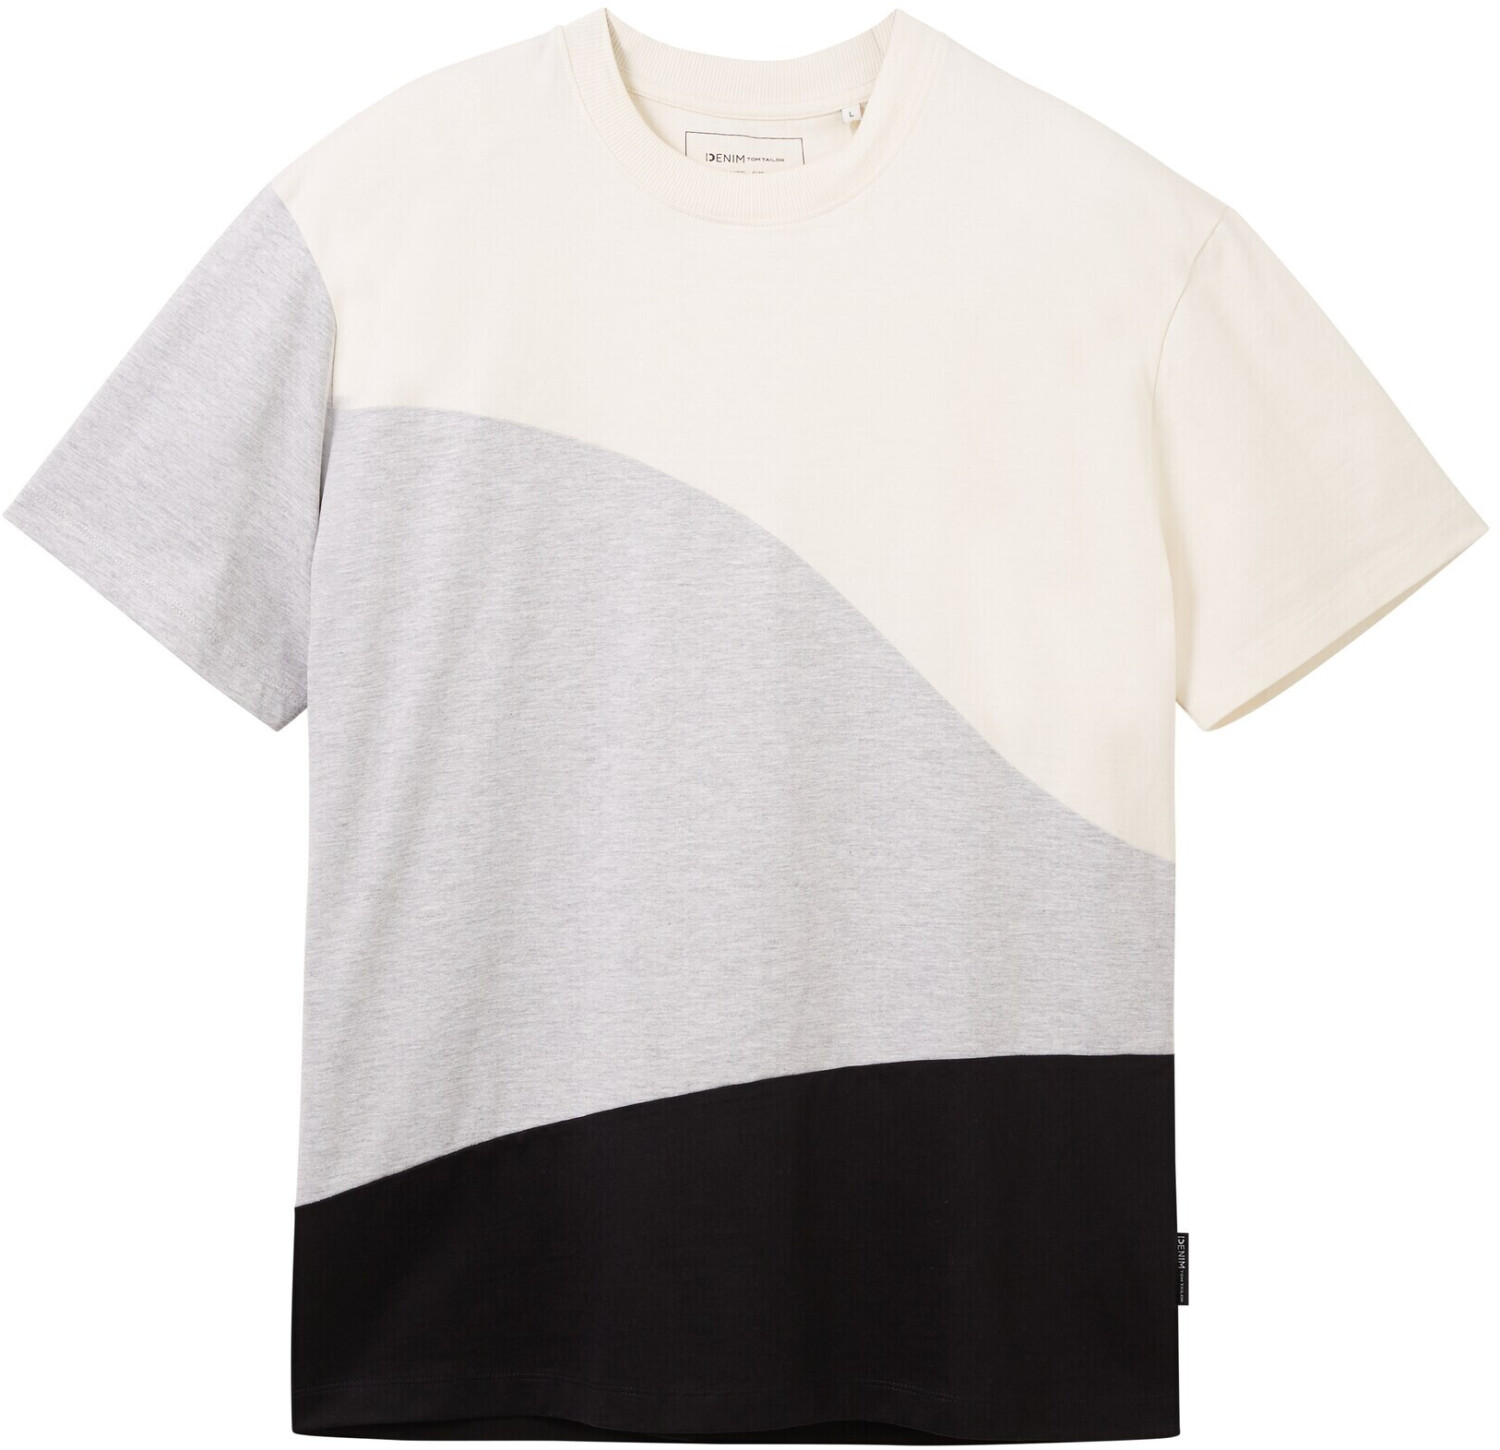 19,35 € ab white Tom Tailor Denim wool Mehrfarbiges Preisvergleich | T-Shirt (1037671-12906) bei